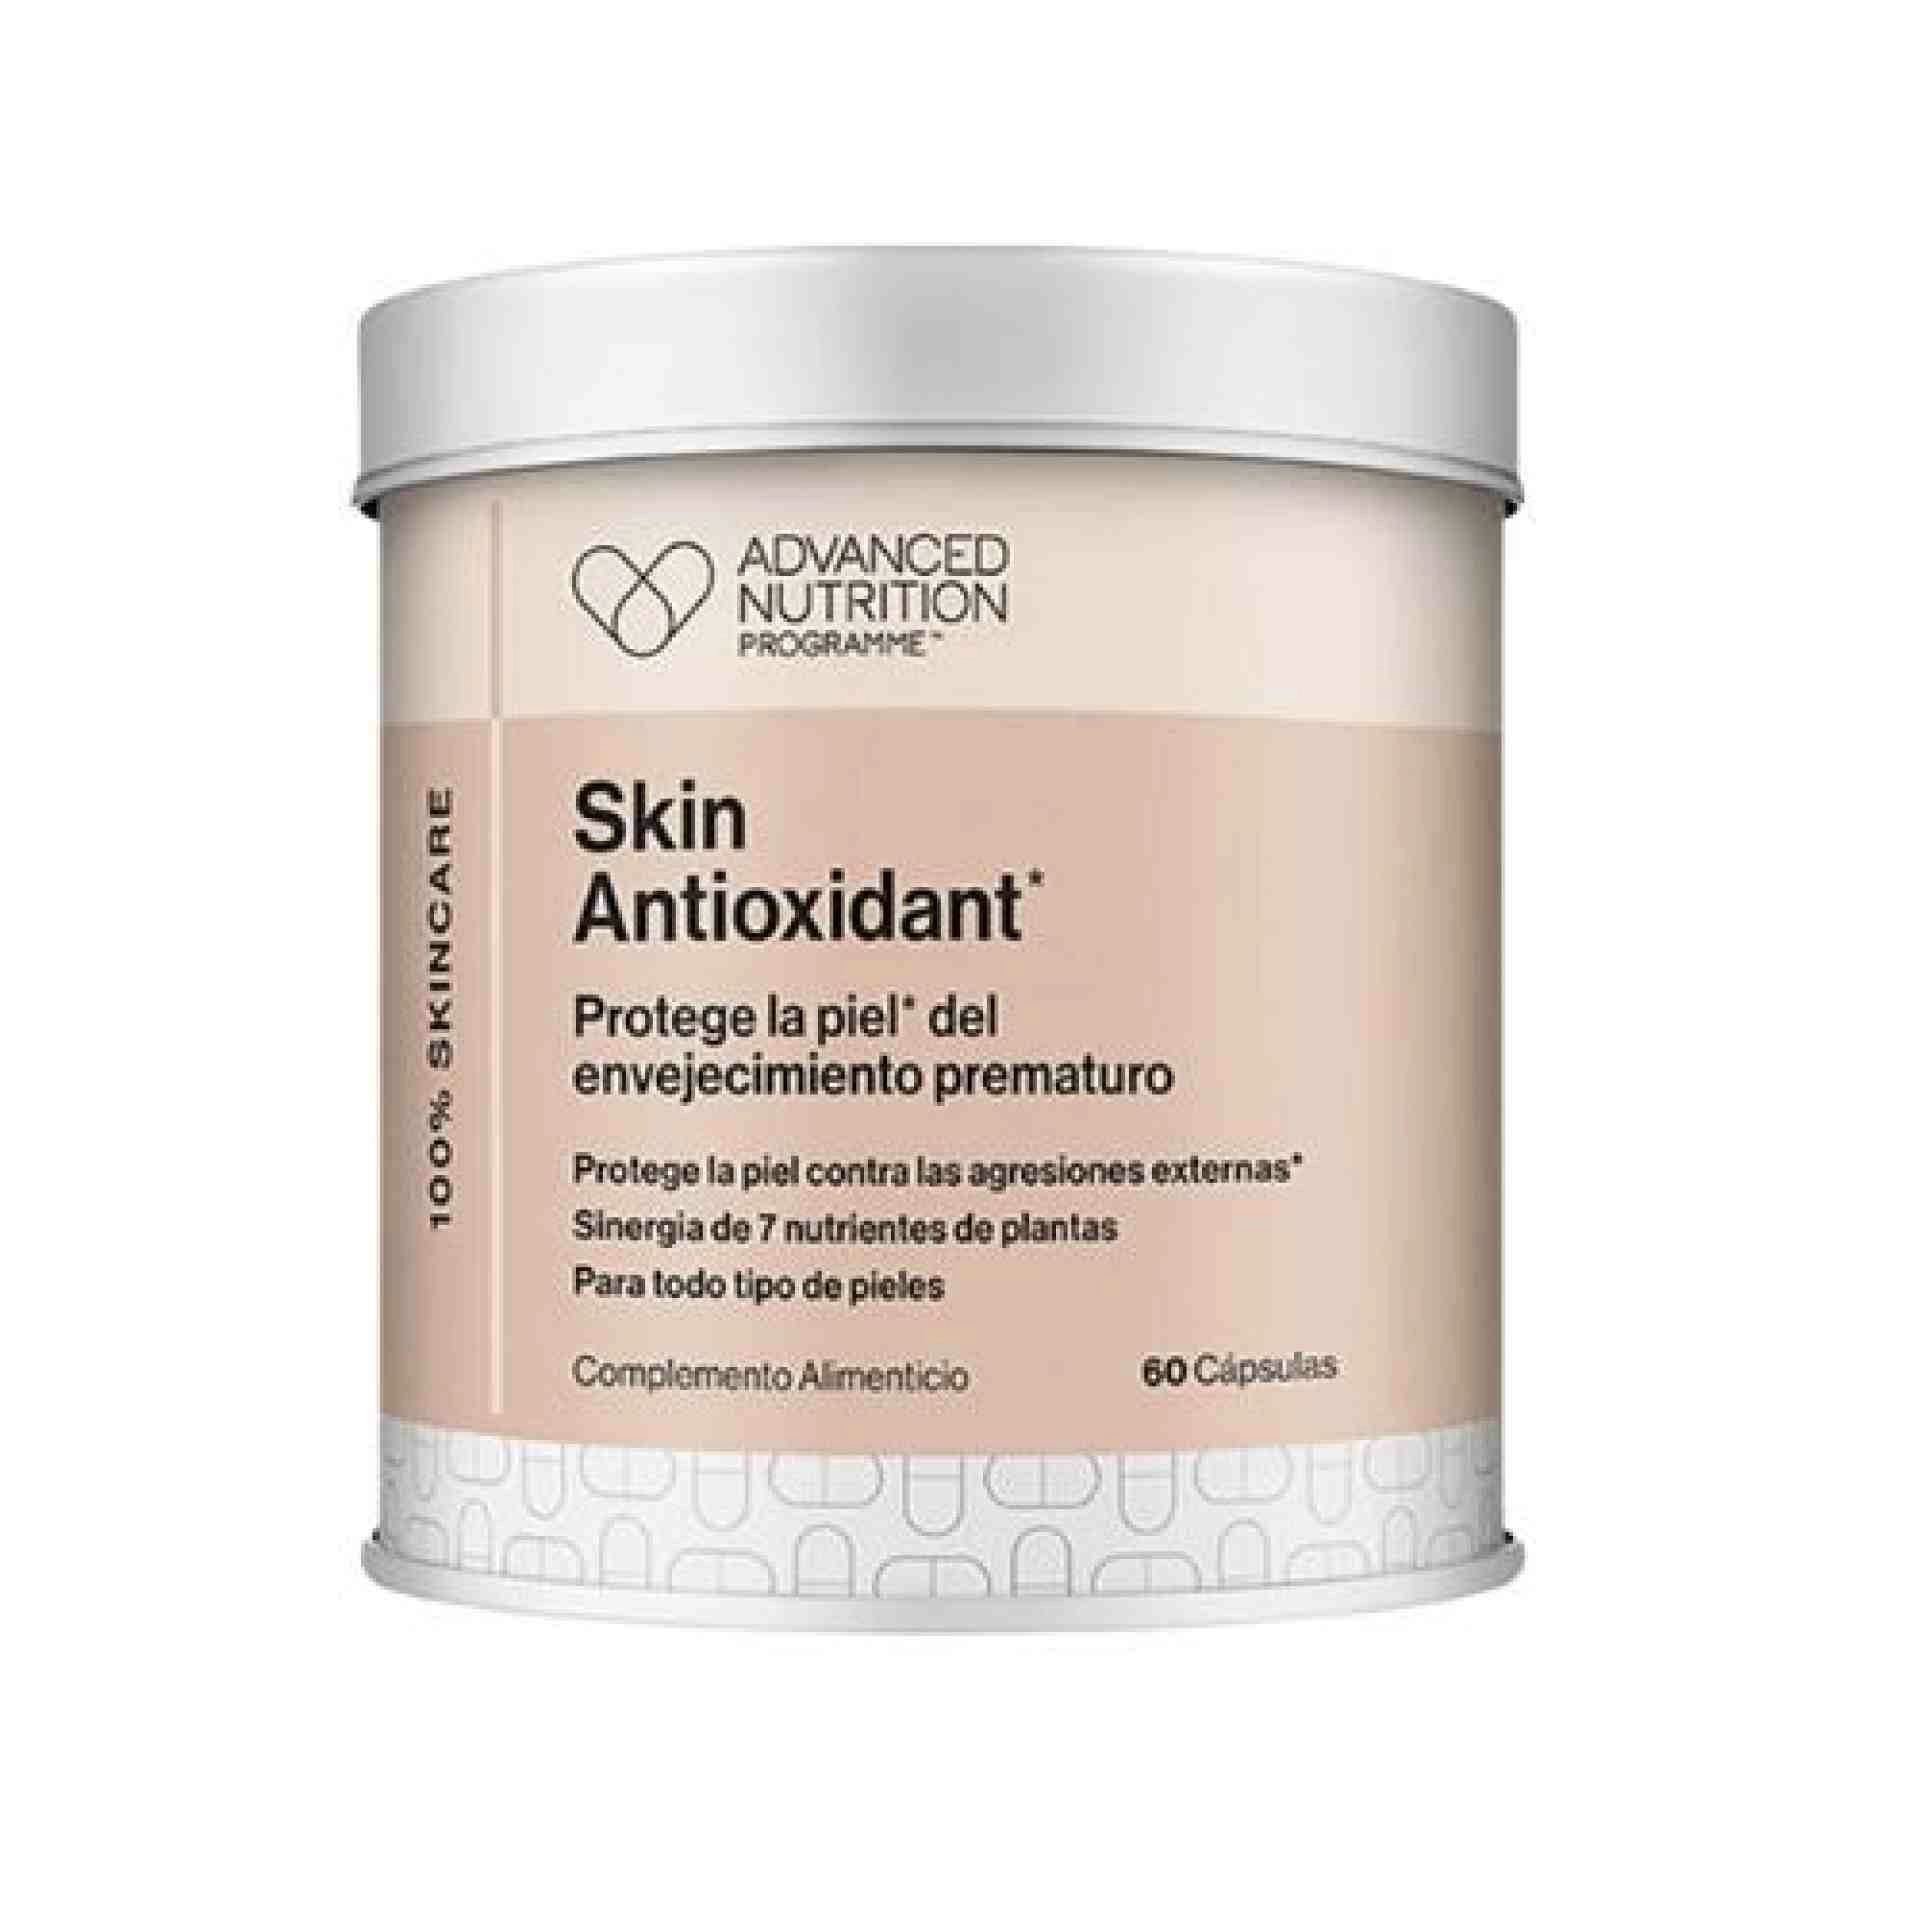 Skin Antioxidant - Nutricosmética 60 caps. - Soluciones específicas - Advanced Nutrition Programme ®